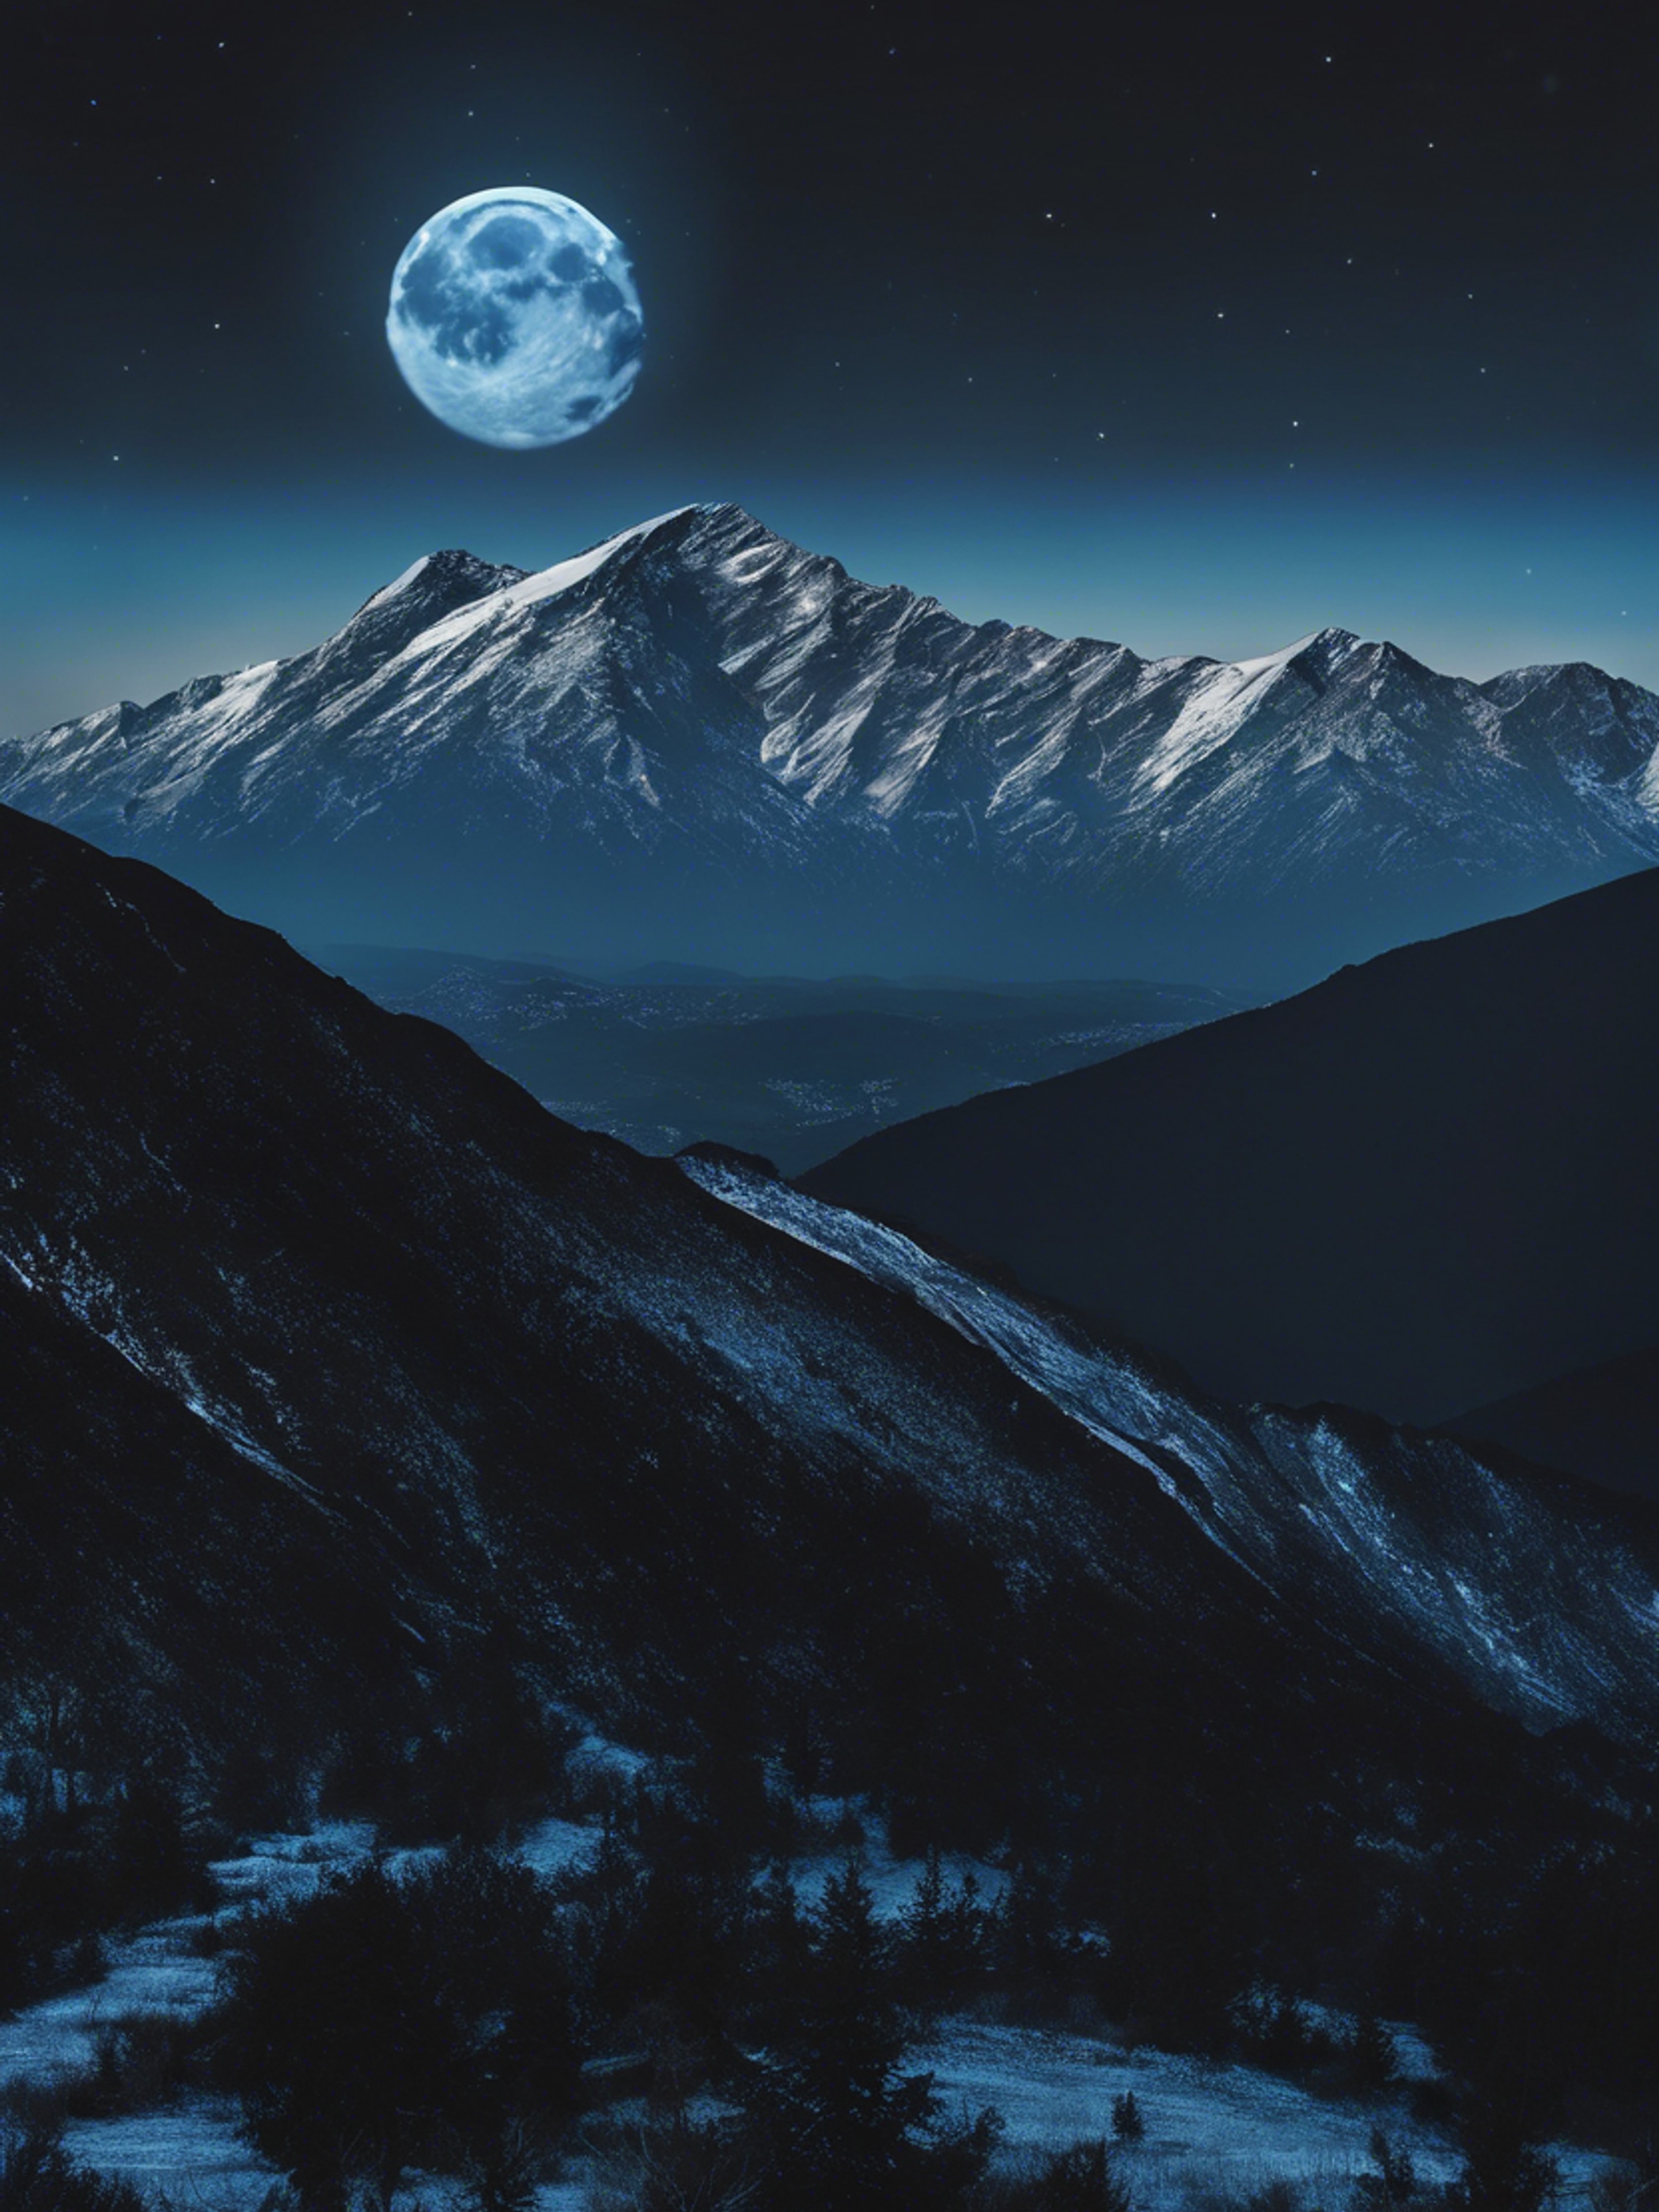 A calm blue moon illuminating the black silhouette of a serene mountain range. 벽지[e9e6a71abde94eeebdbf]